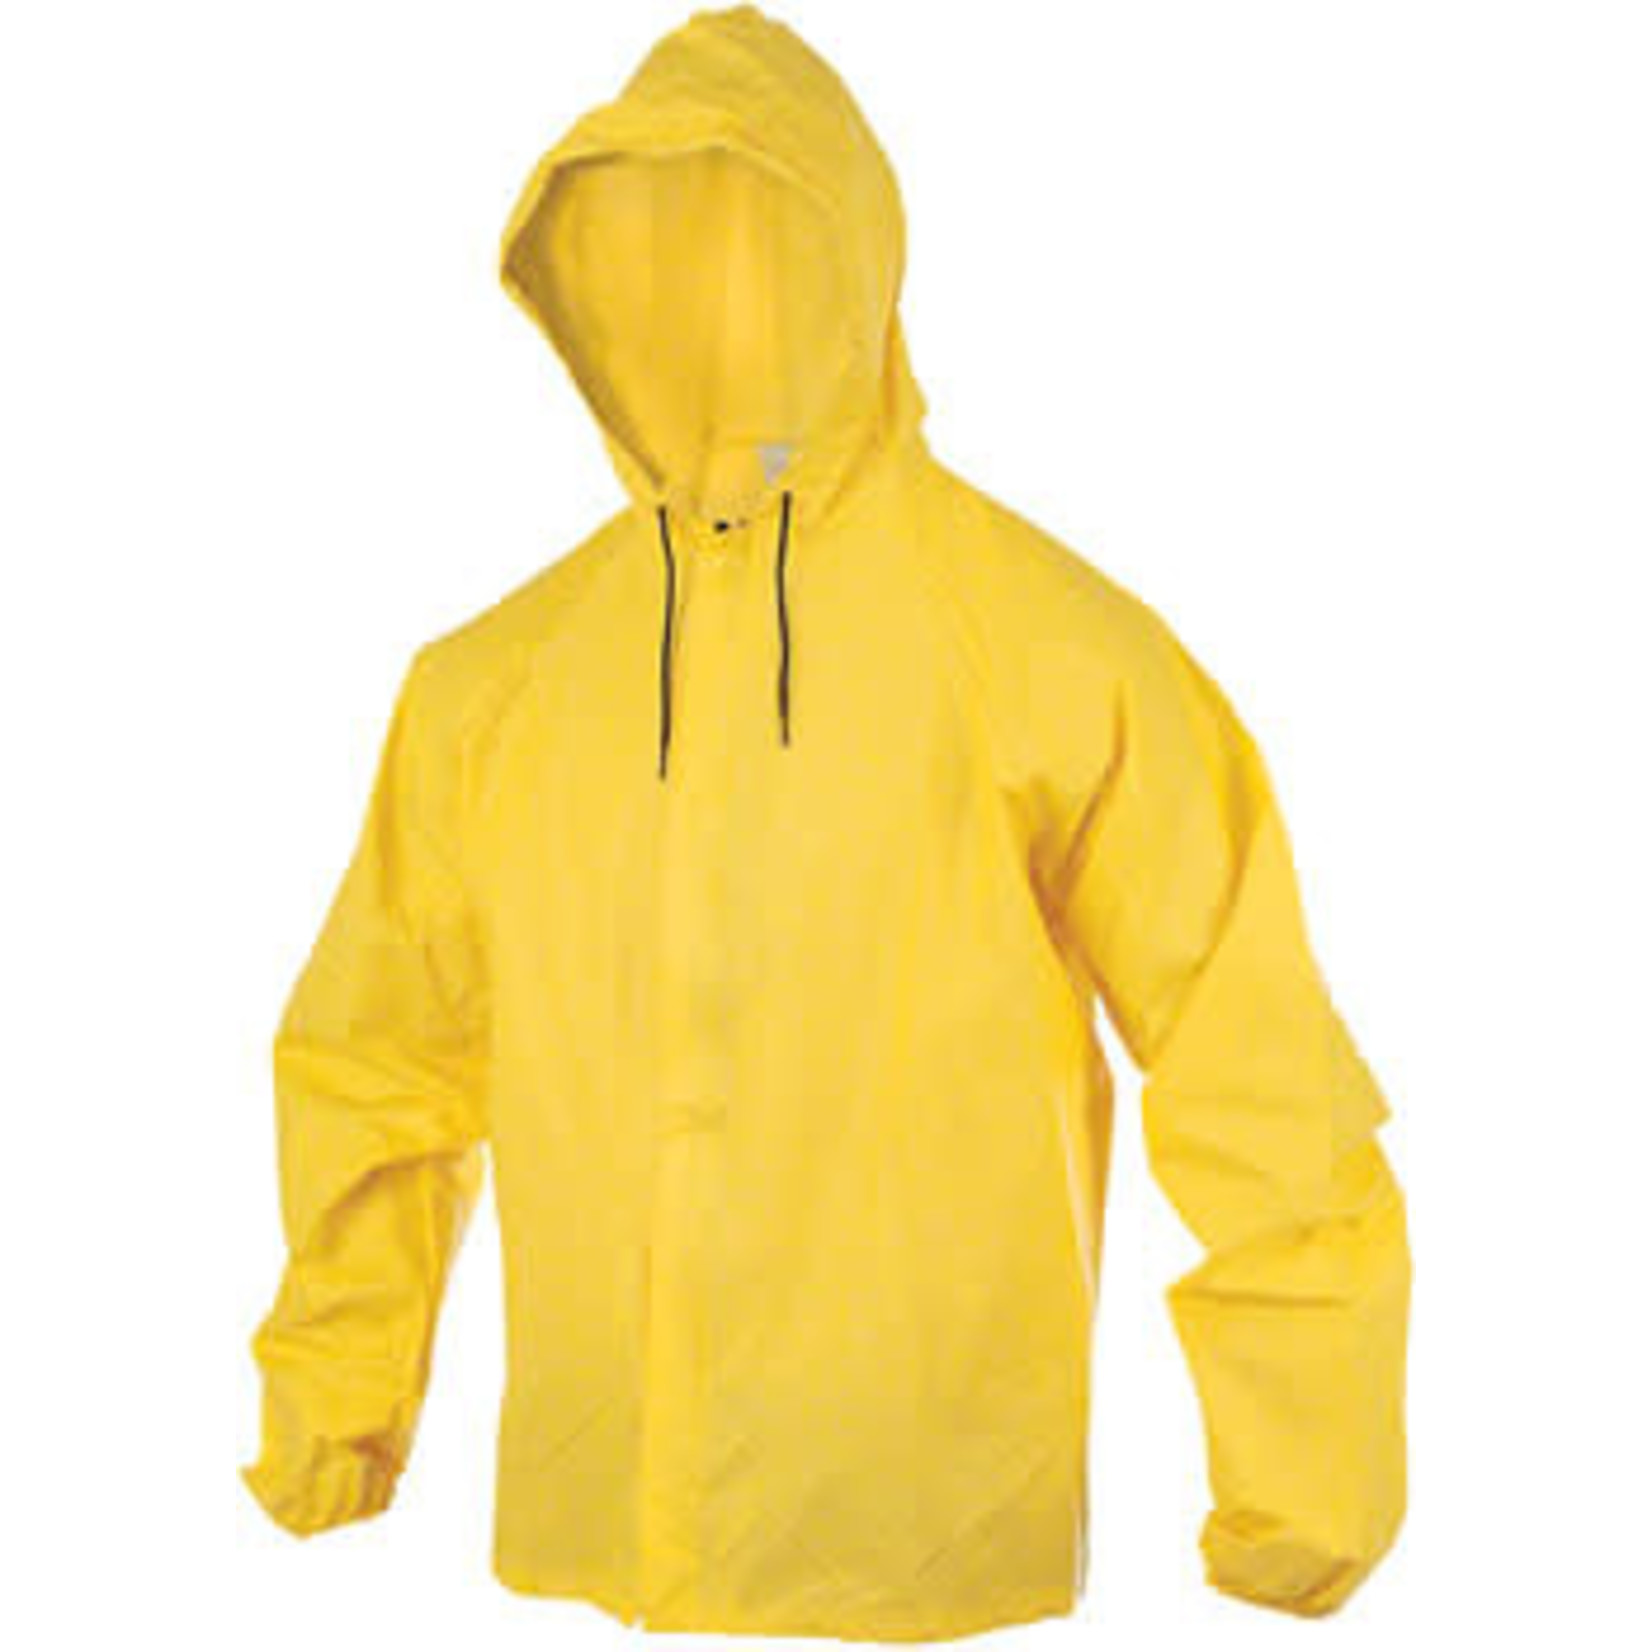 O2 Rainwear O2 Rainwear Hooded Rain Jacket with Drop Tail: yellow sml